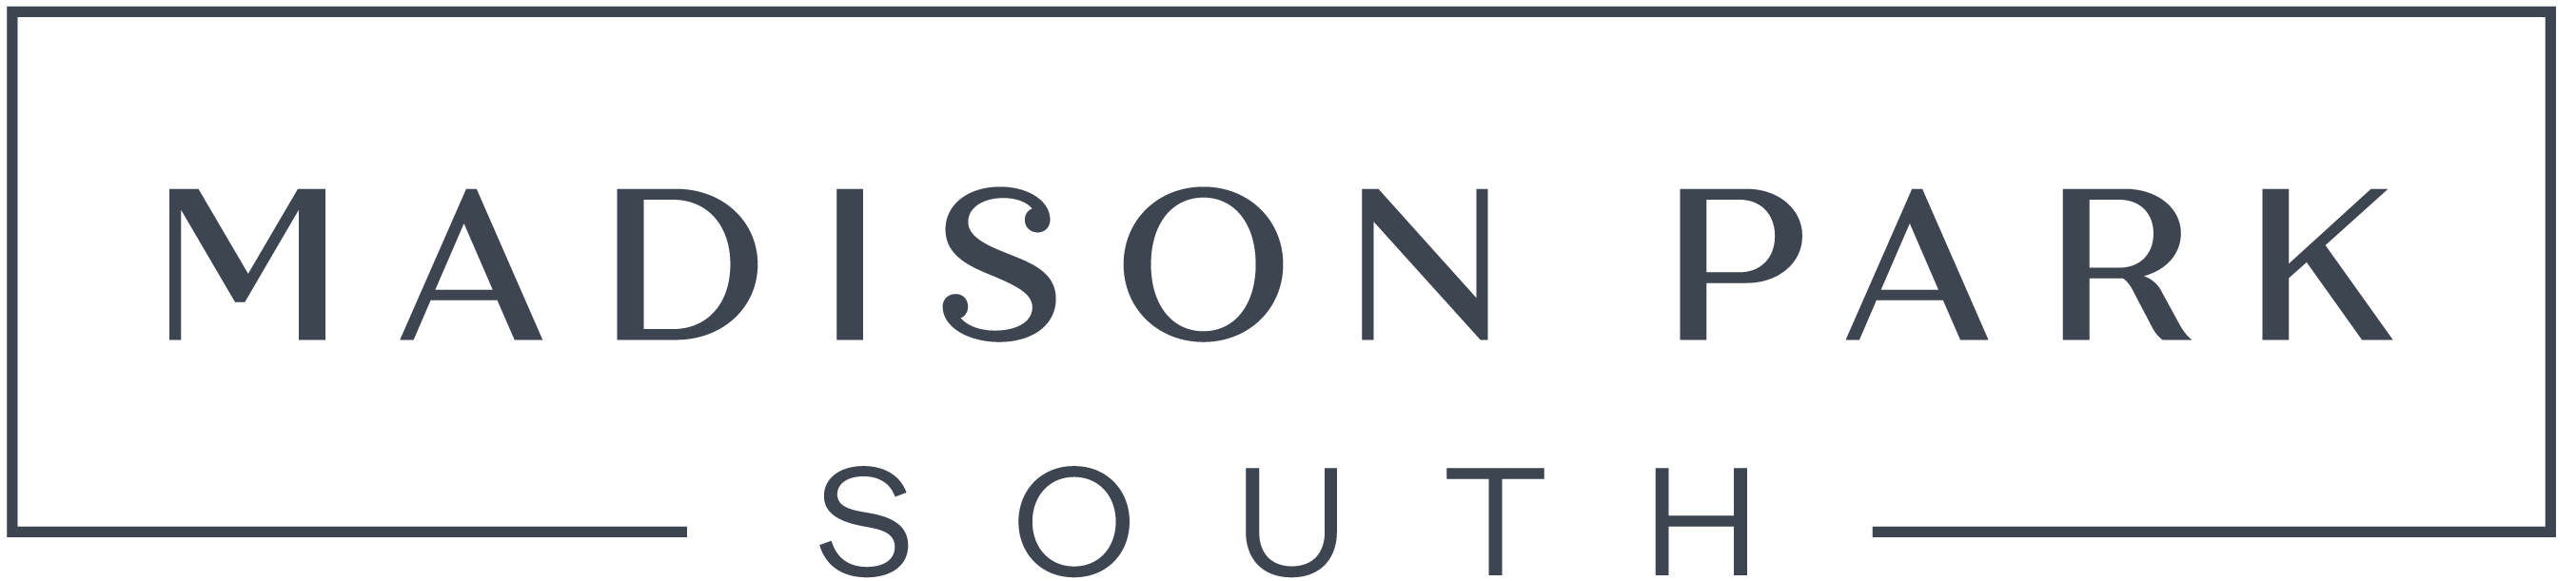 MadisonParkSouth-Logo_Navy